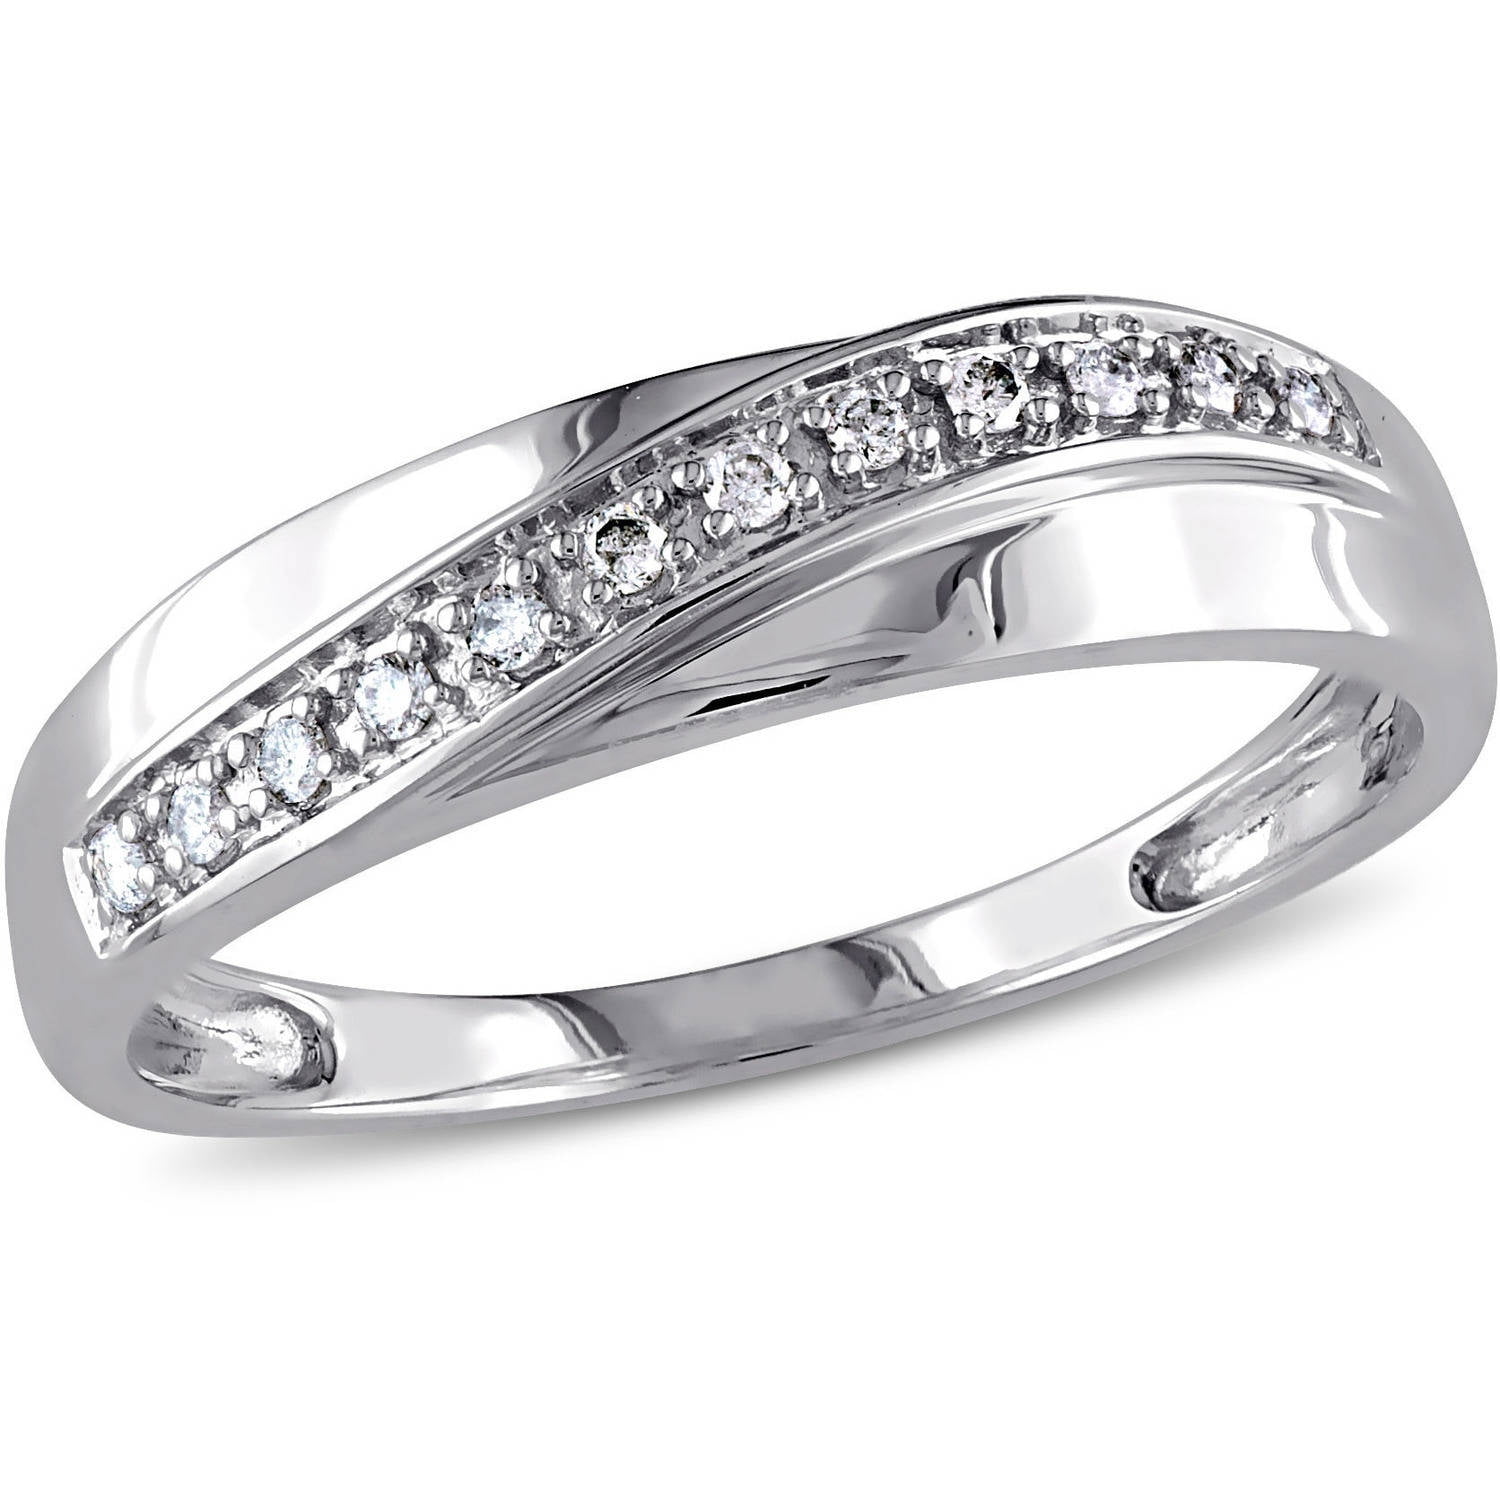 G-H, I2-I3 Amour Sterling Silver 1/10ct TDW Diamond Crisscross Ring